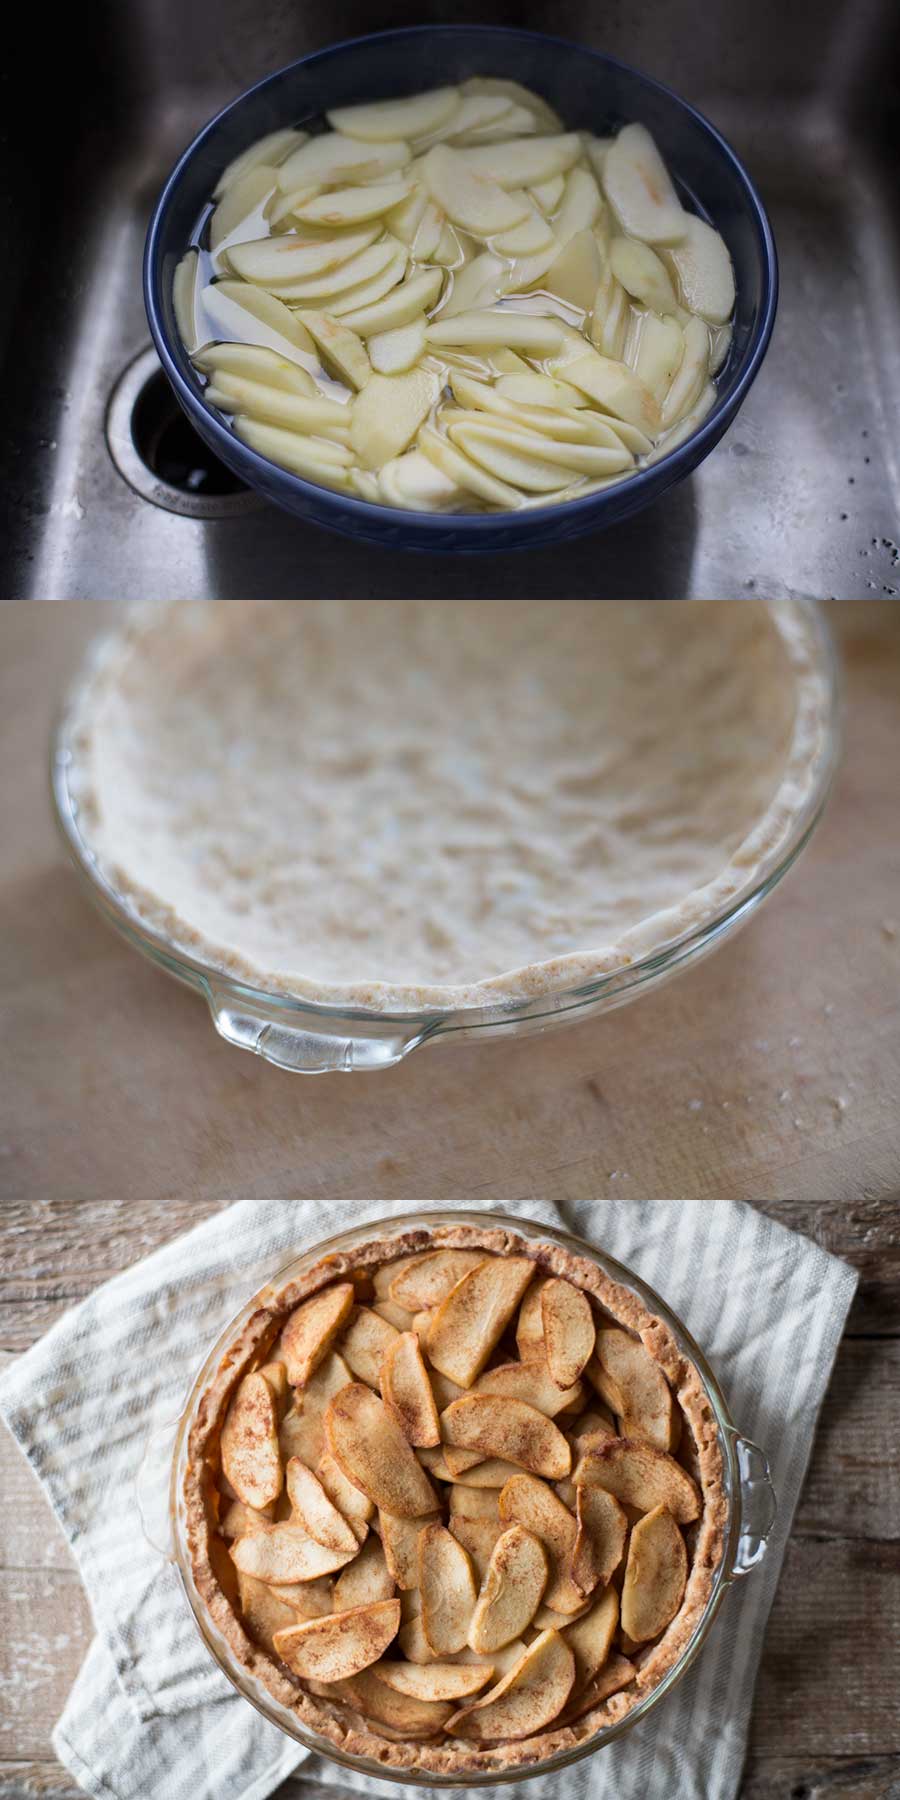 Apple Pie Collage